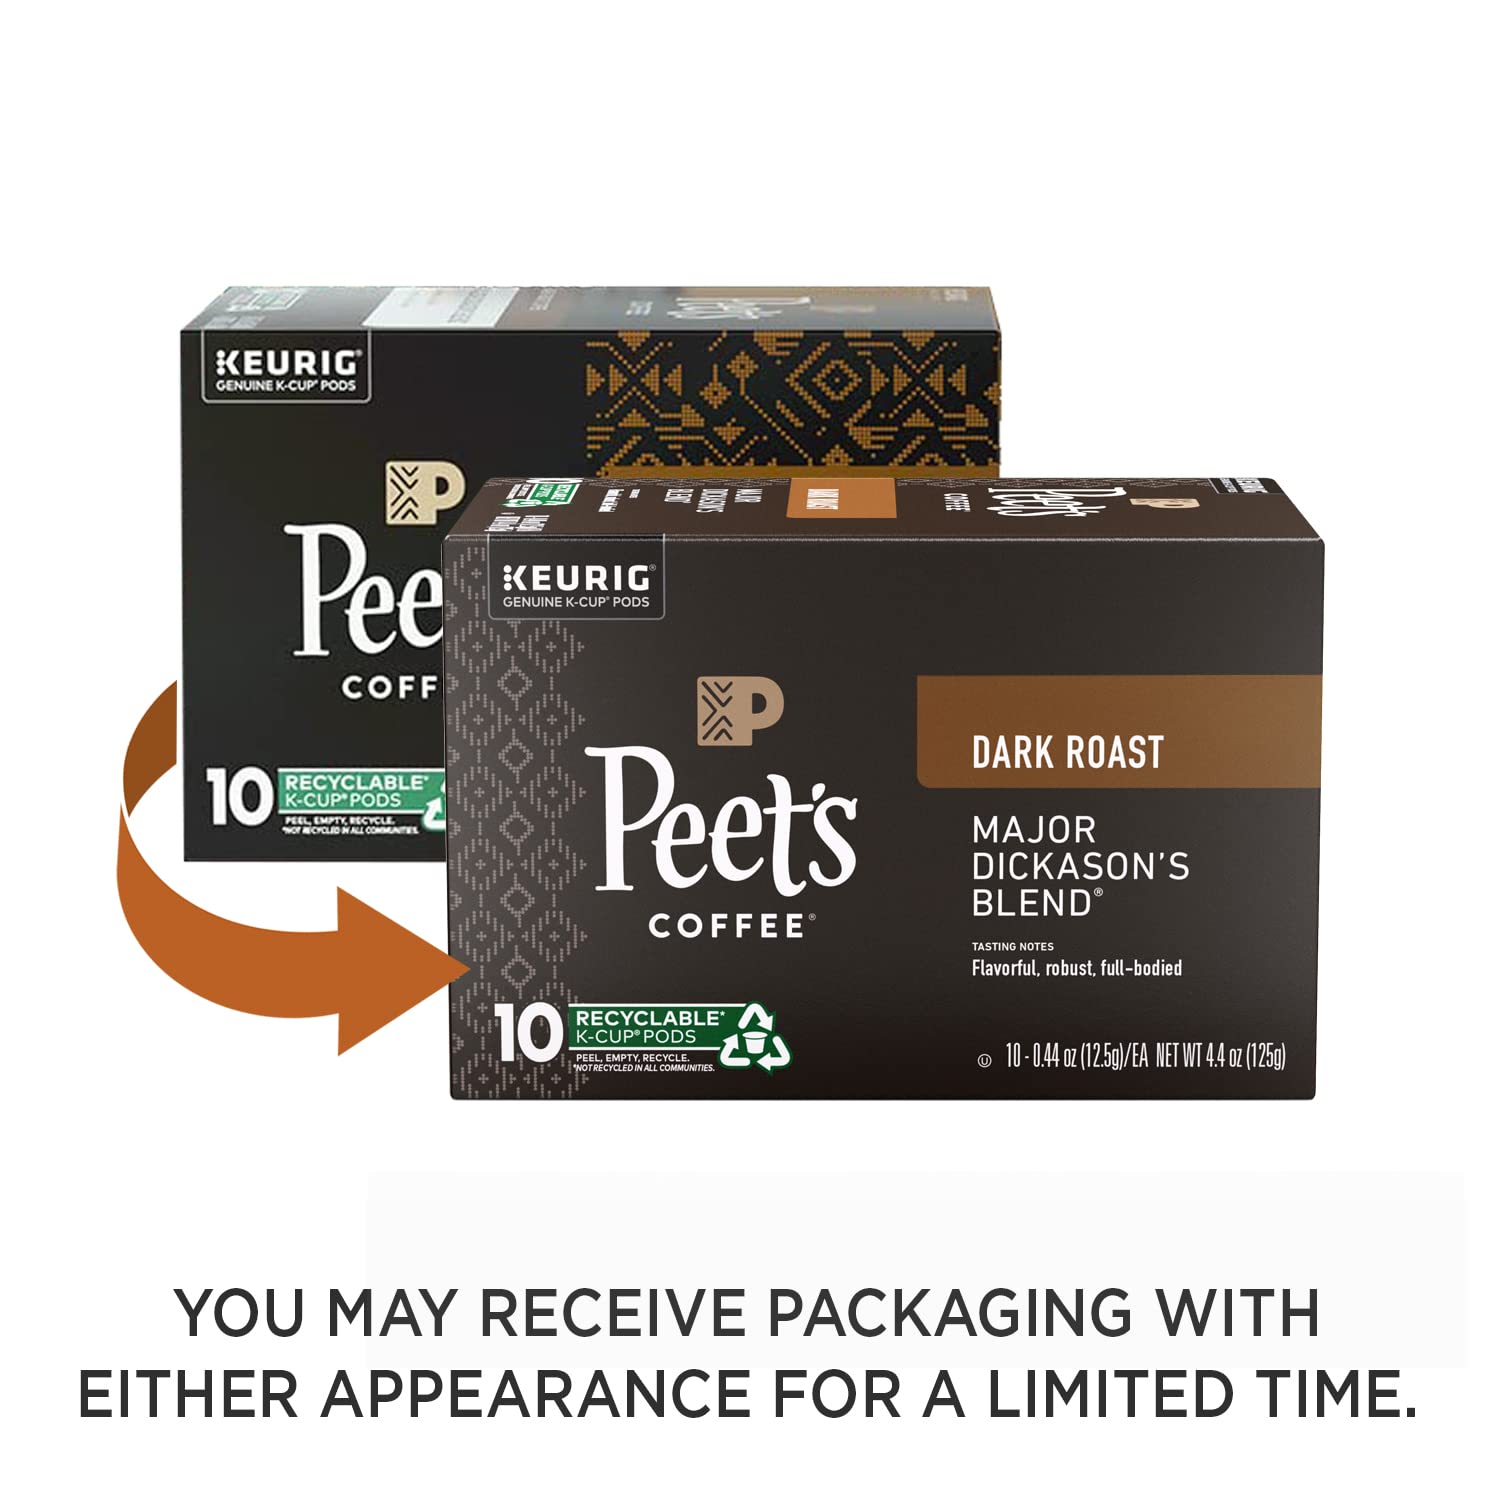 Peet's Coffee Coffee, Whole Bean, Dark Roast, Major Dickason’s Blend - 10.5 oz